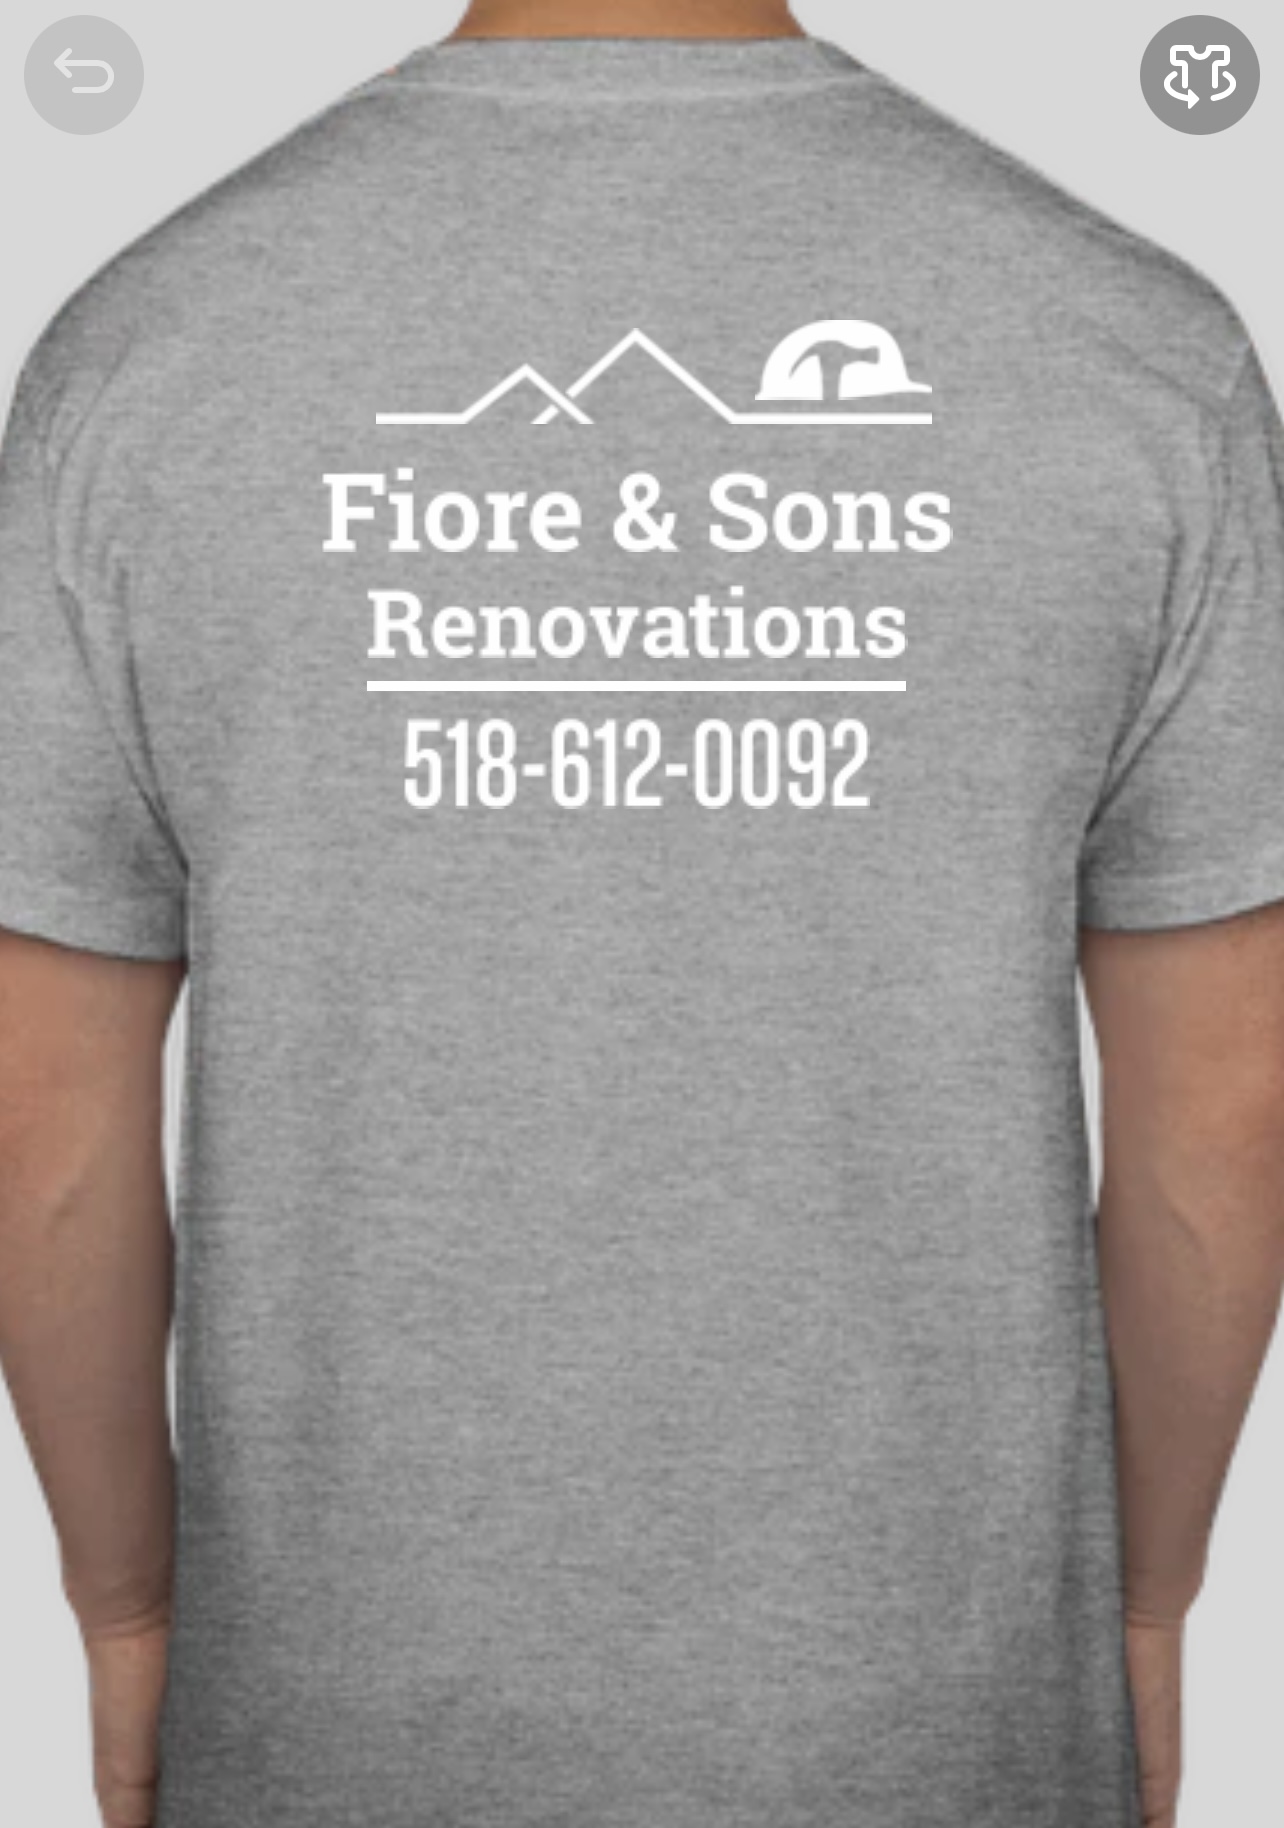 Fiore & Sons Renovations LLC